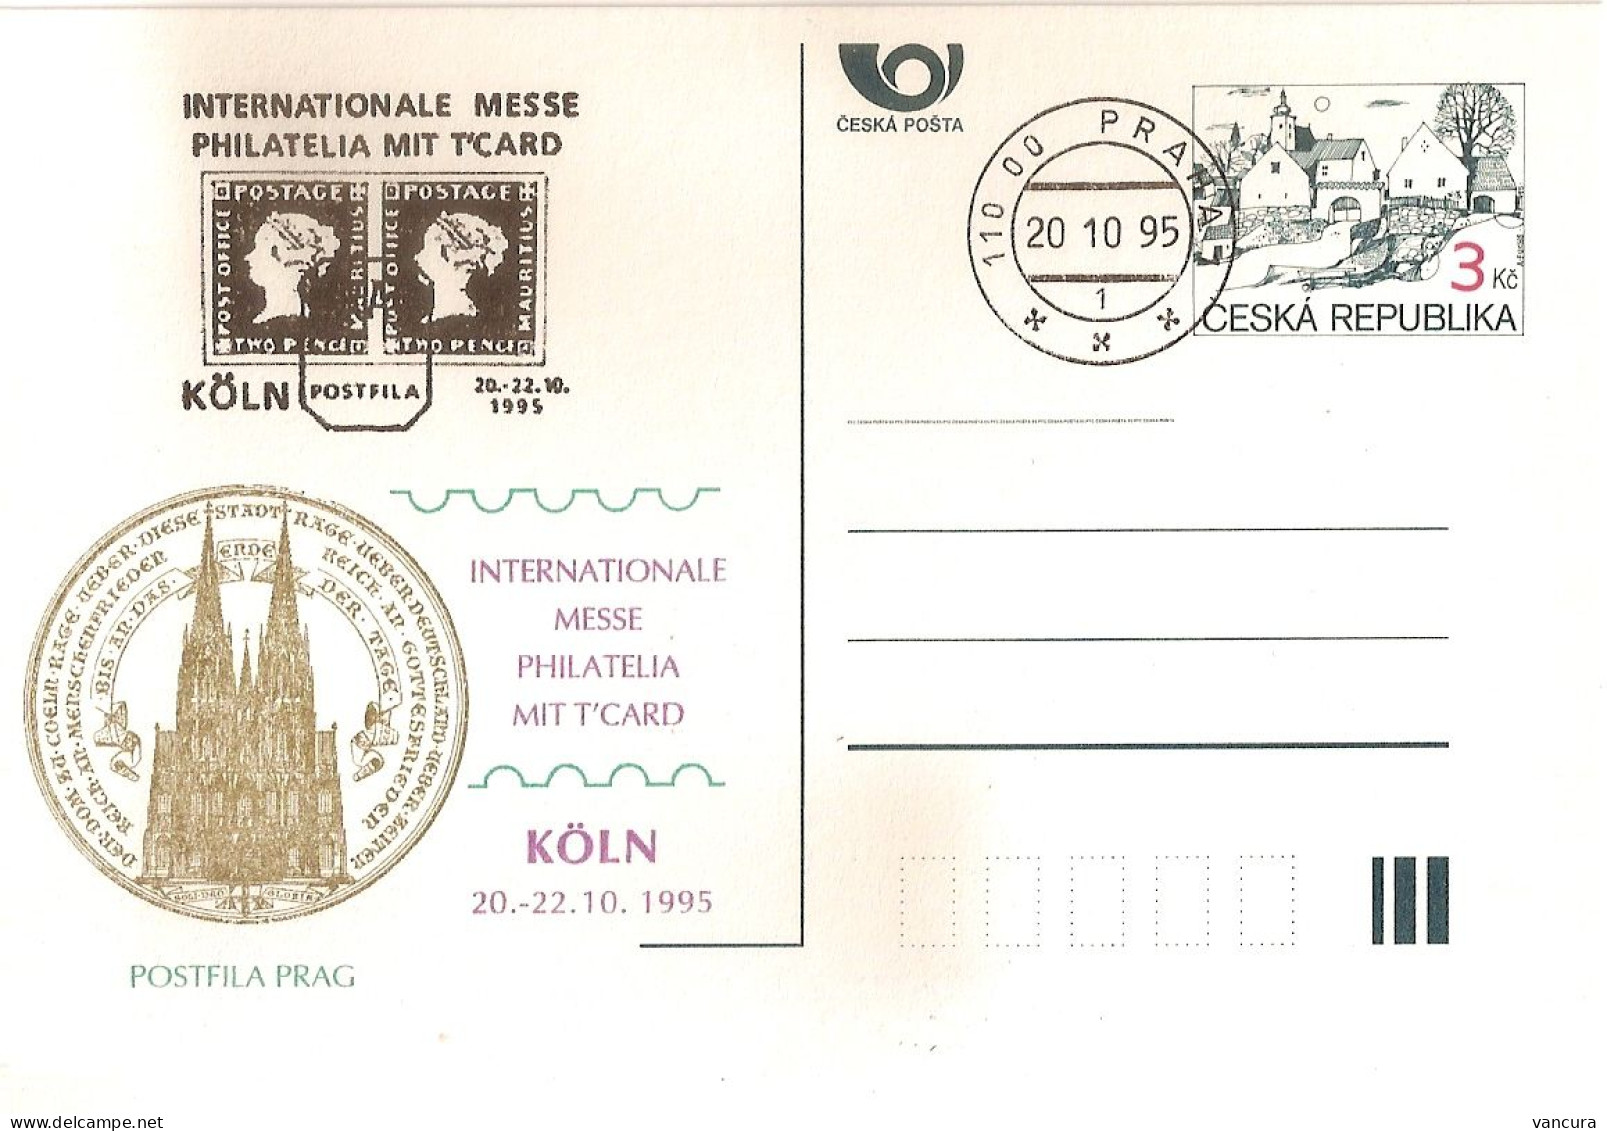 CDV A 10 Czech Republic Köln 1995 NOTICE POOR SCAN, BUT THE CARD IS PERFECT! Pennyblack - Postales